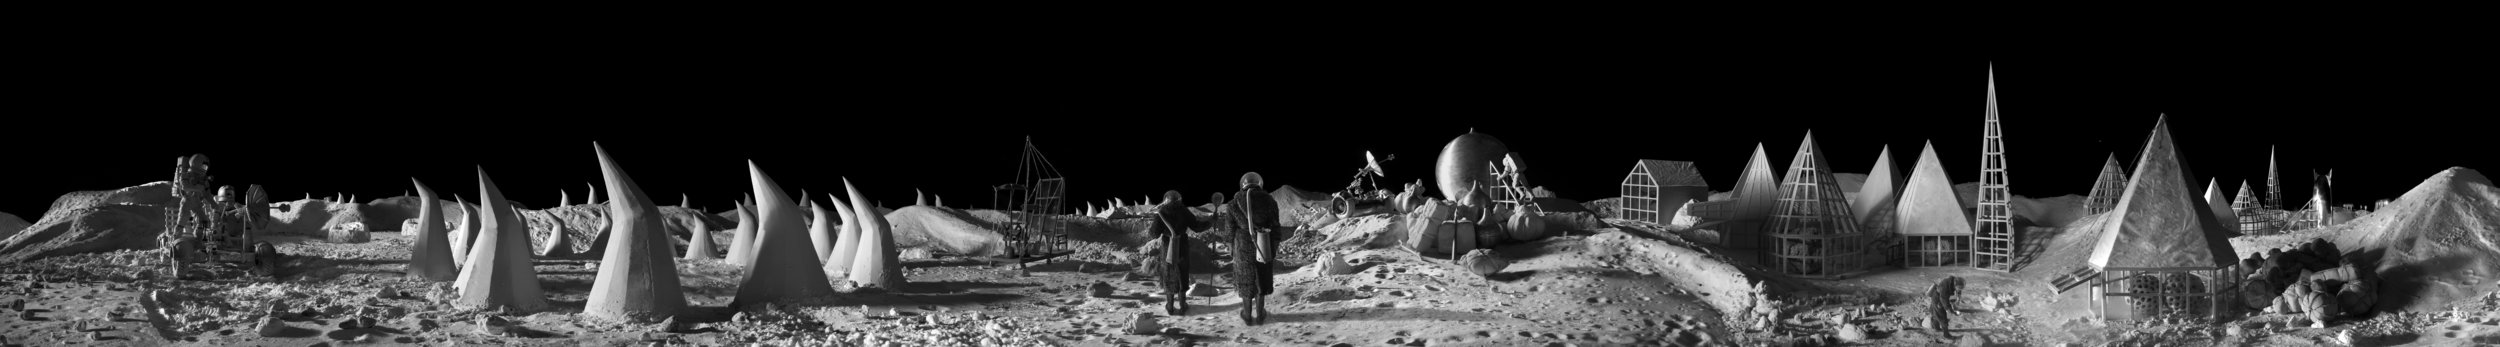 lunar encampment c.jpg